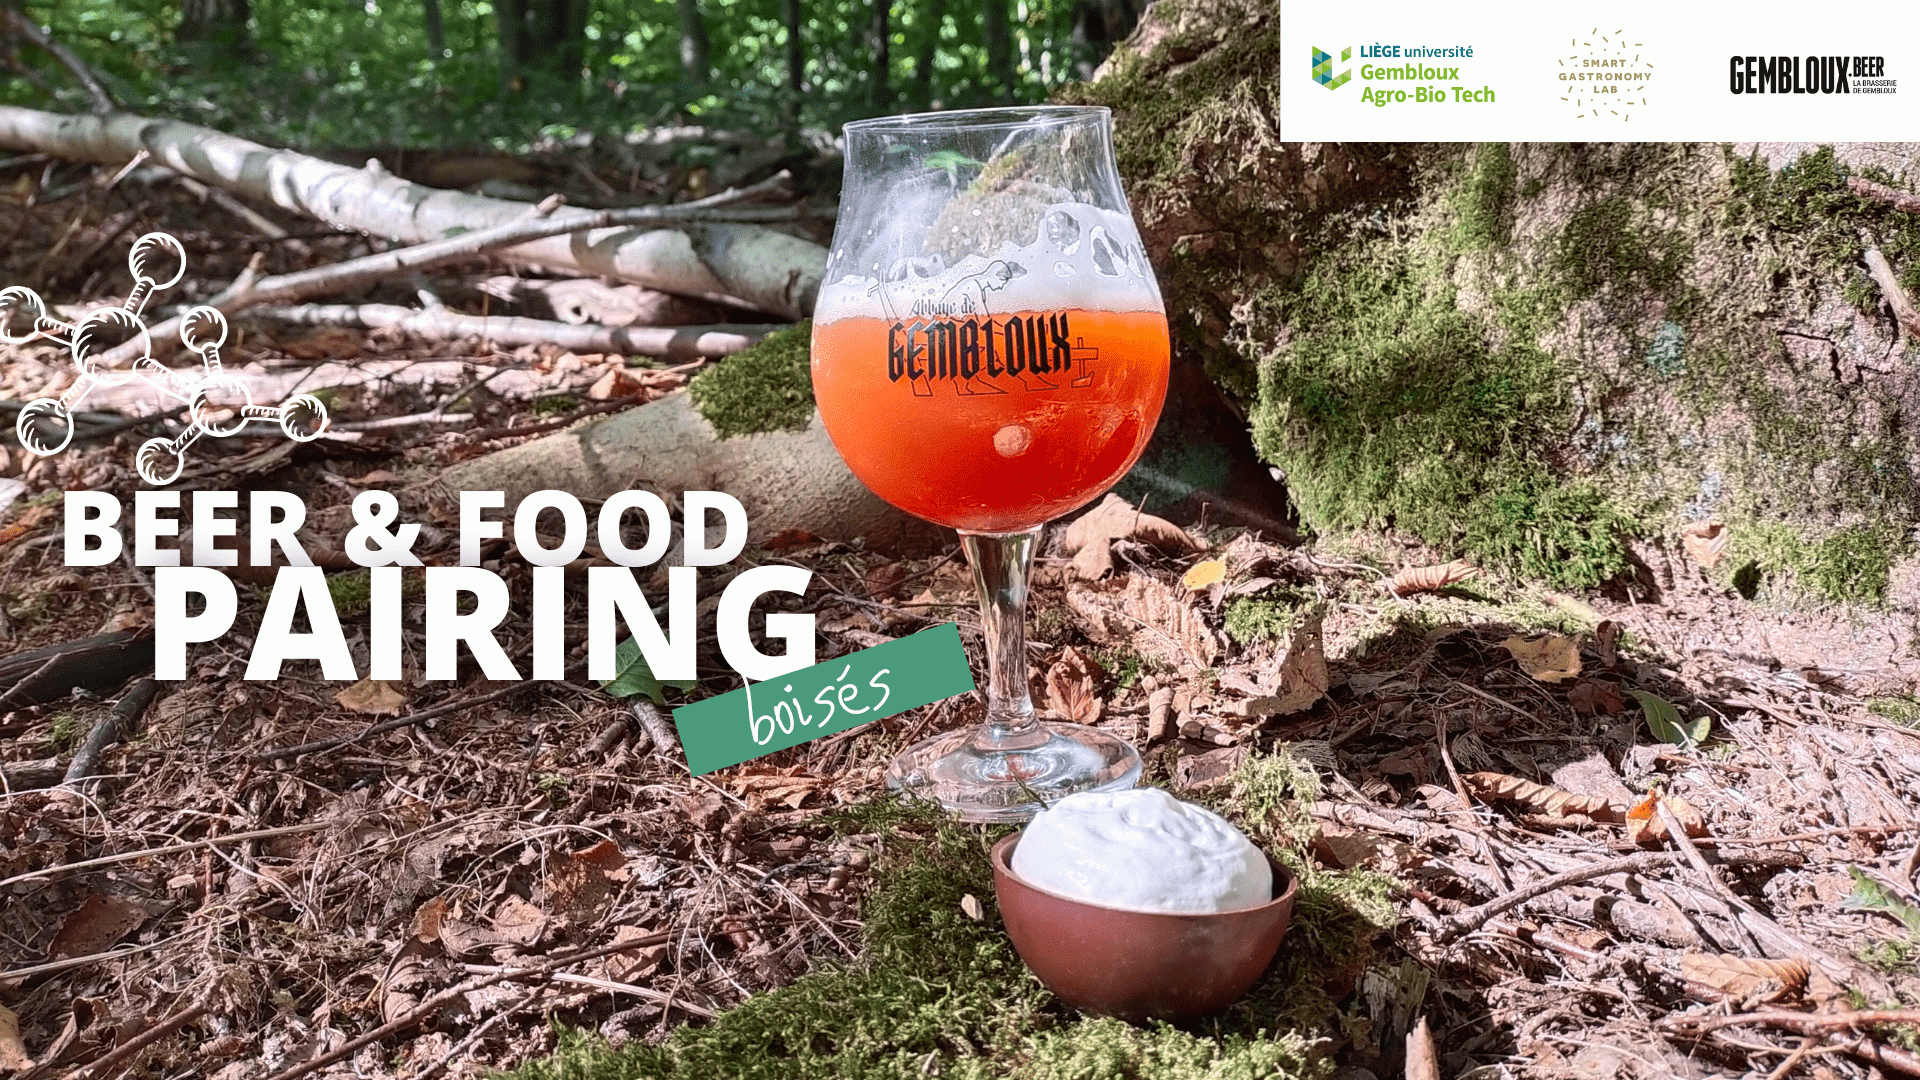 Beer & Food Pairing en Forêt Noire